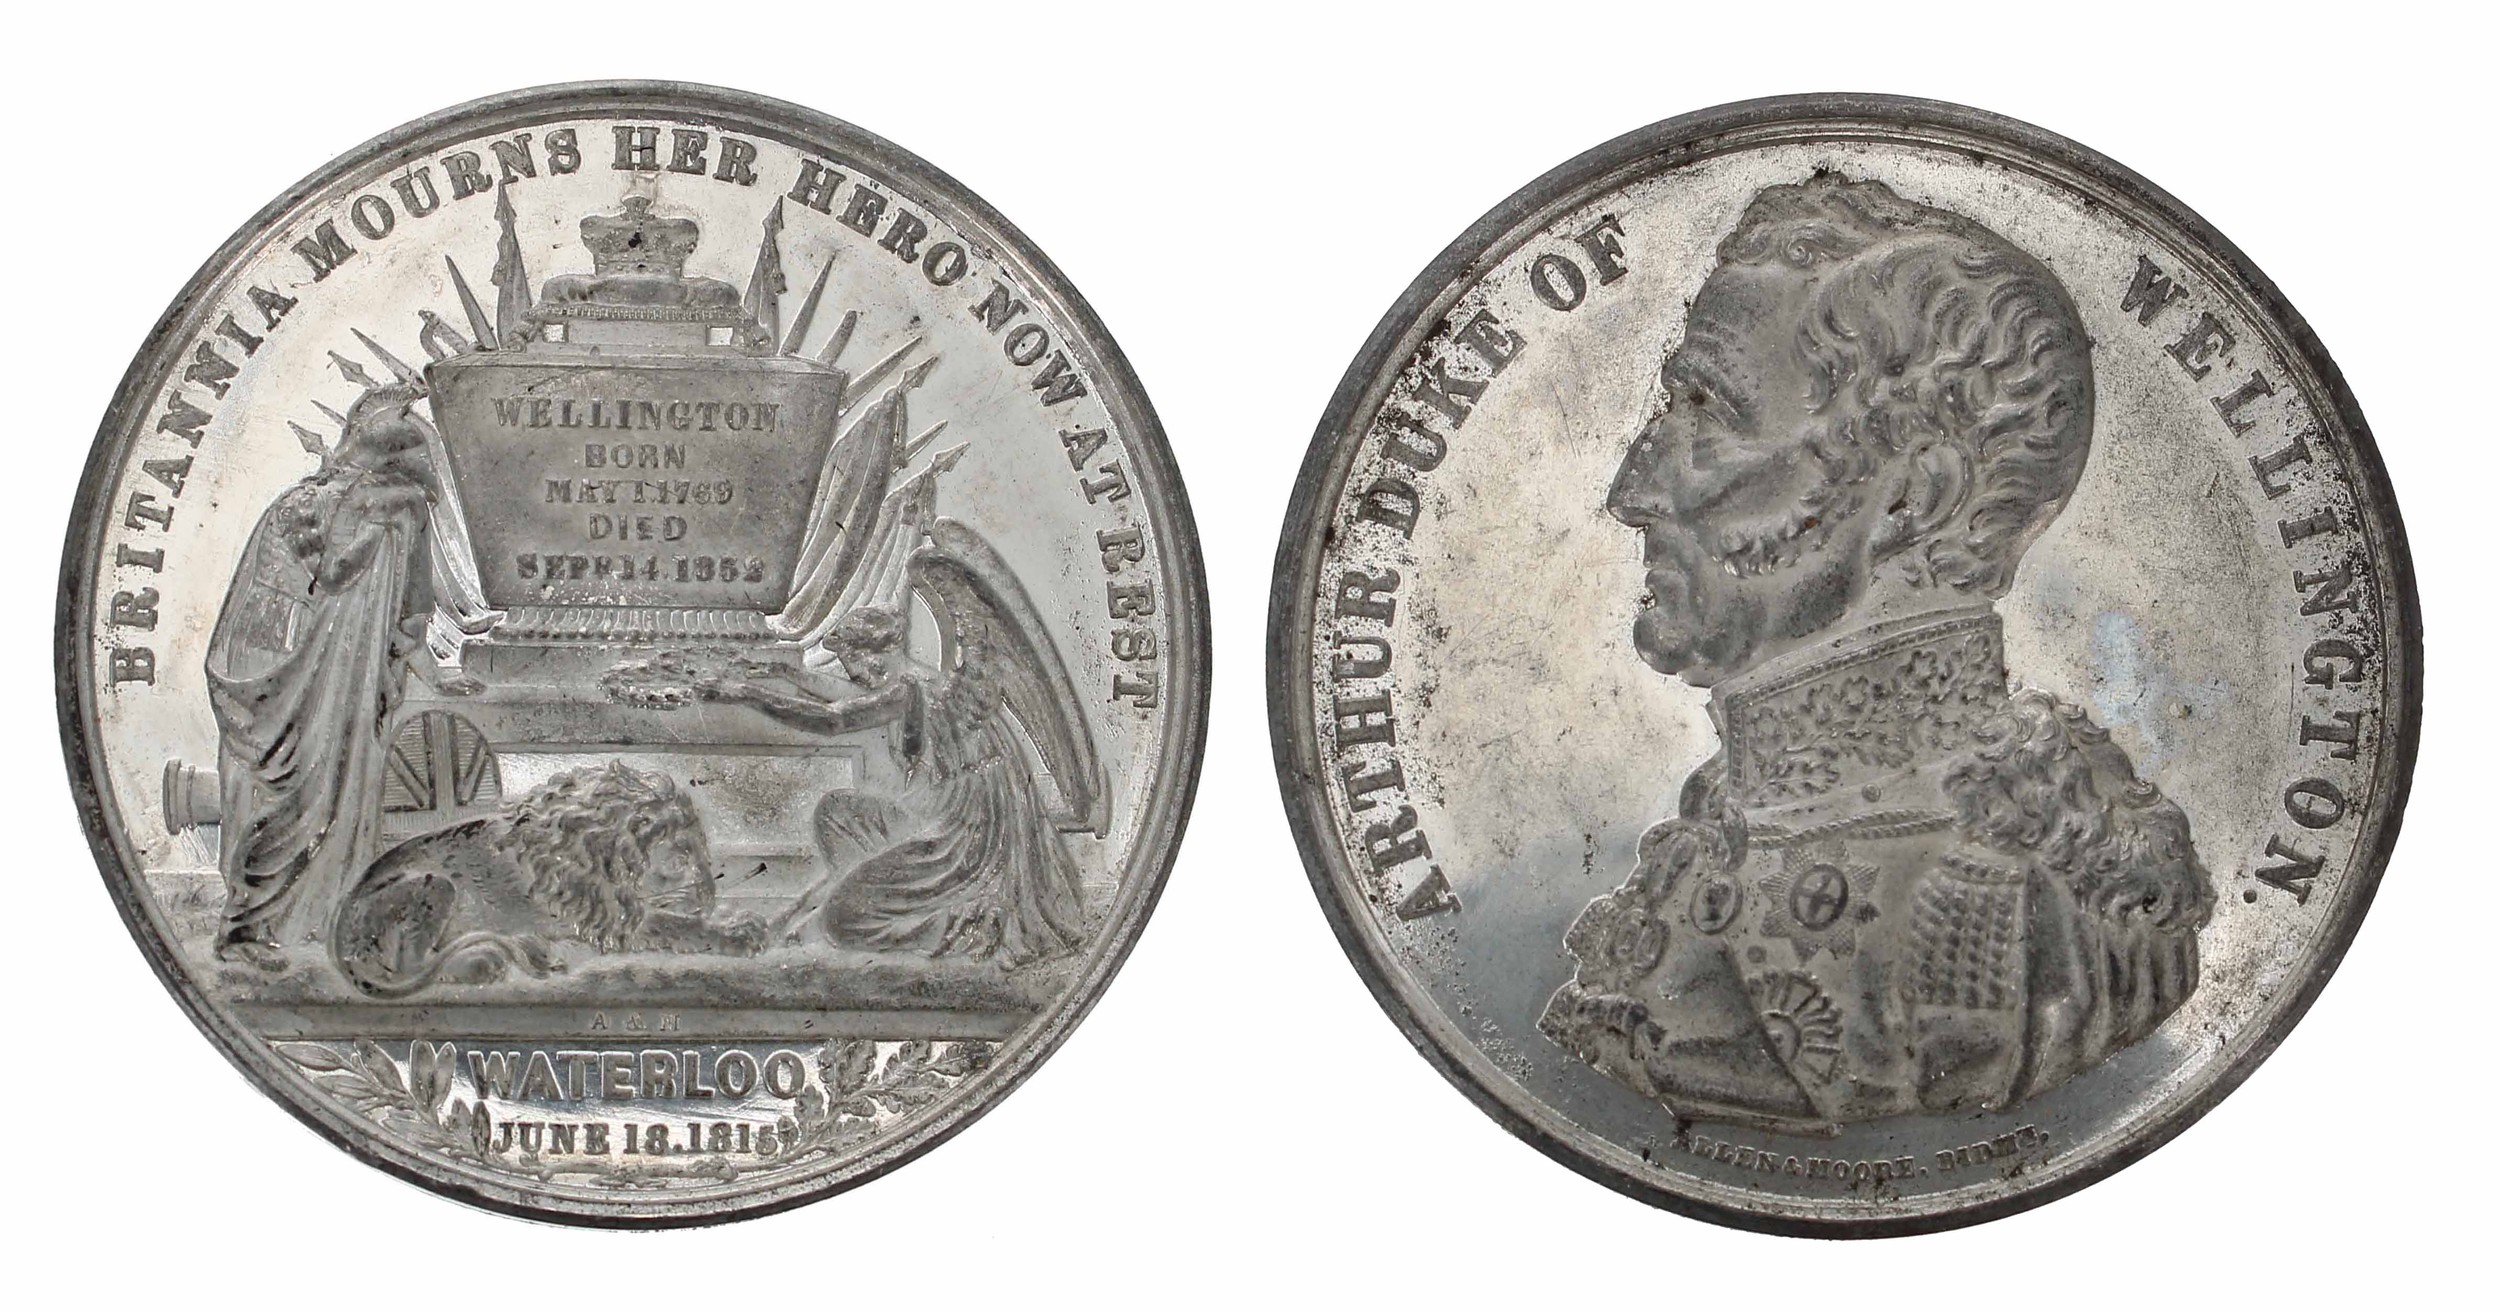 Allen & Moore metal medal - Death of The Duke of Wellington 1852, Uniformed bust portrait opposite